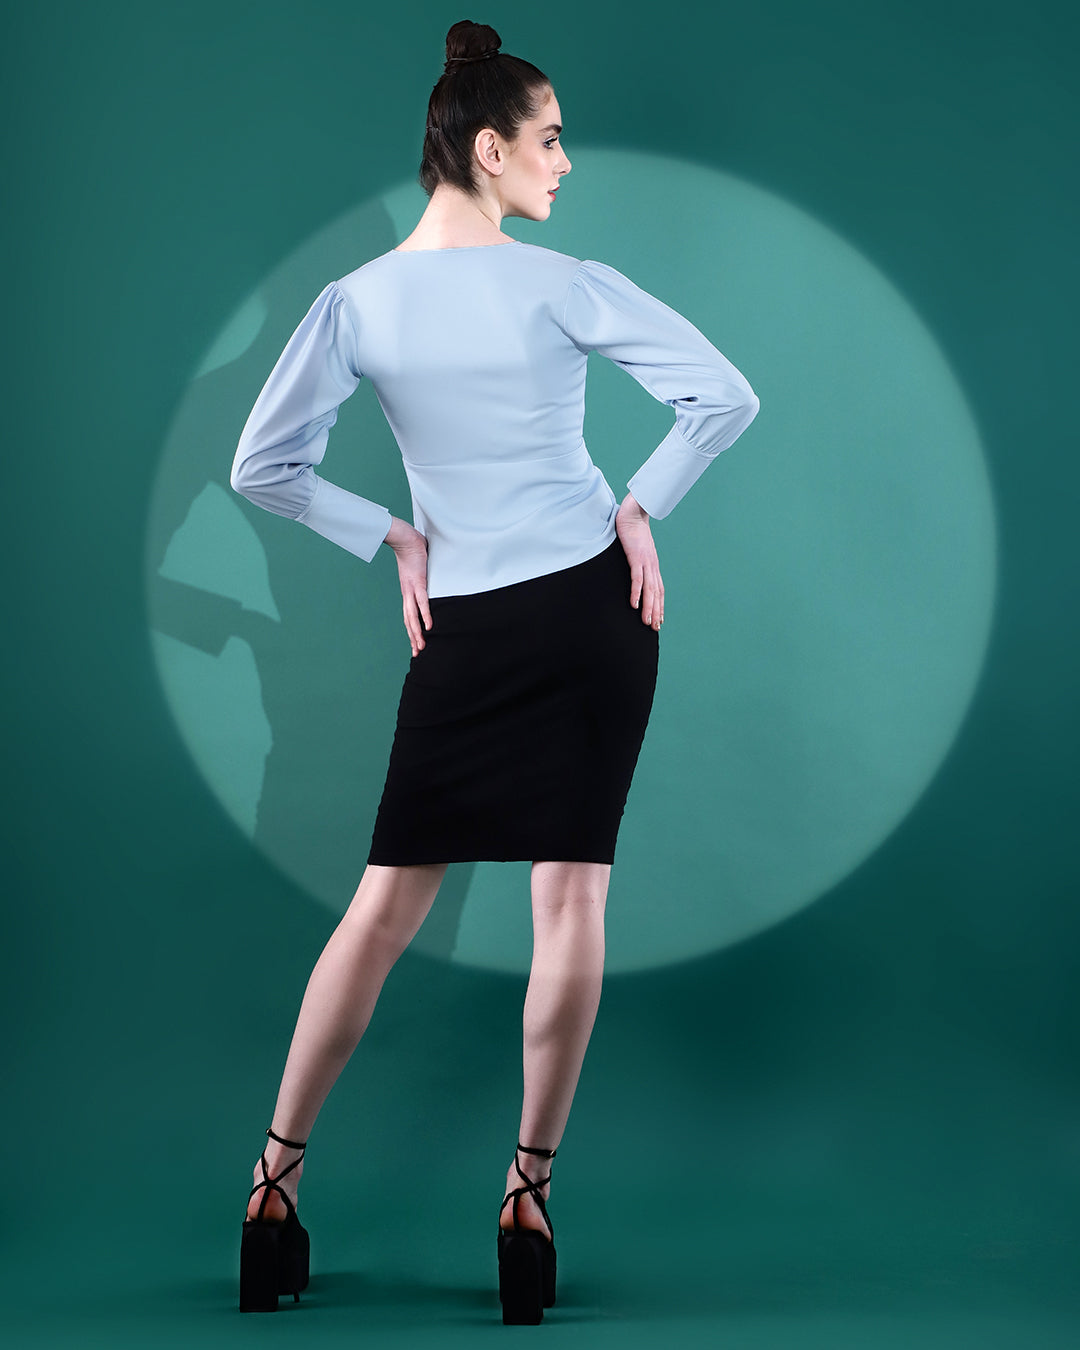 UNFLD Women Ribbed Midi Skirt | High Waist Pencil Skirts Knee Length – Black